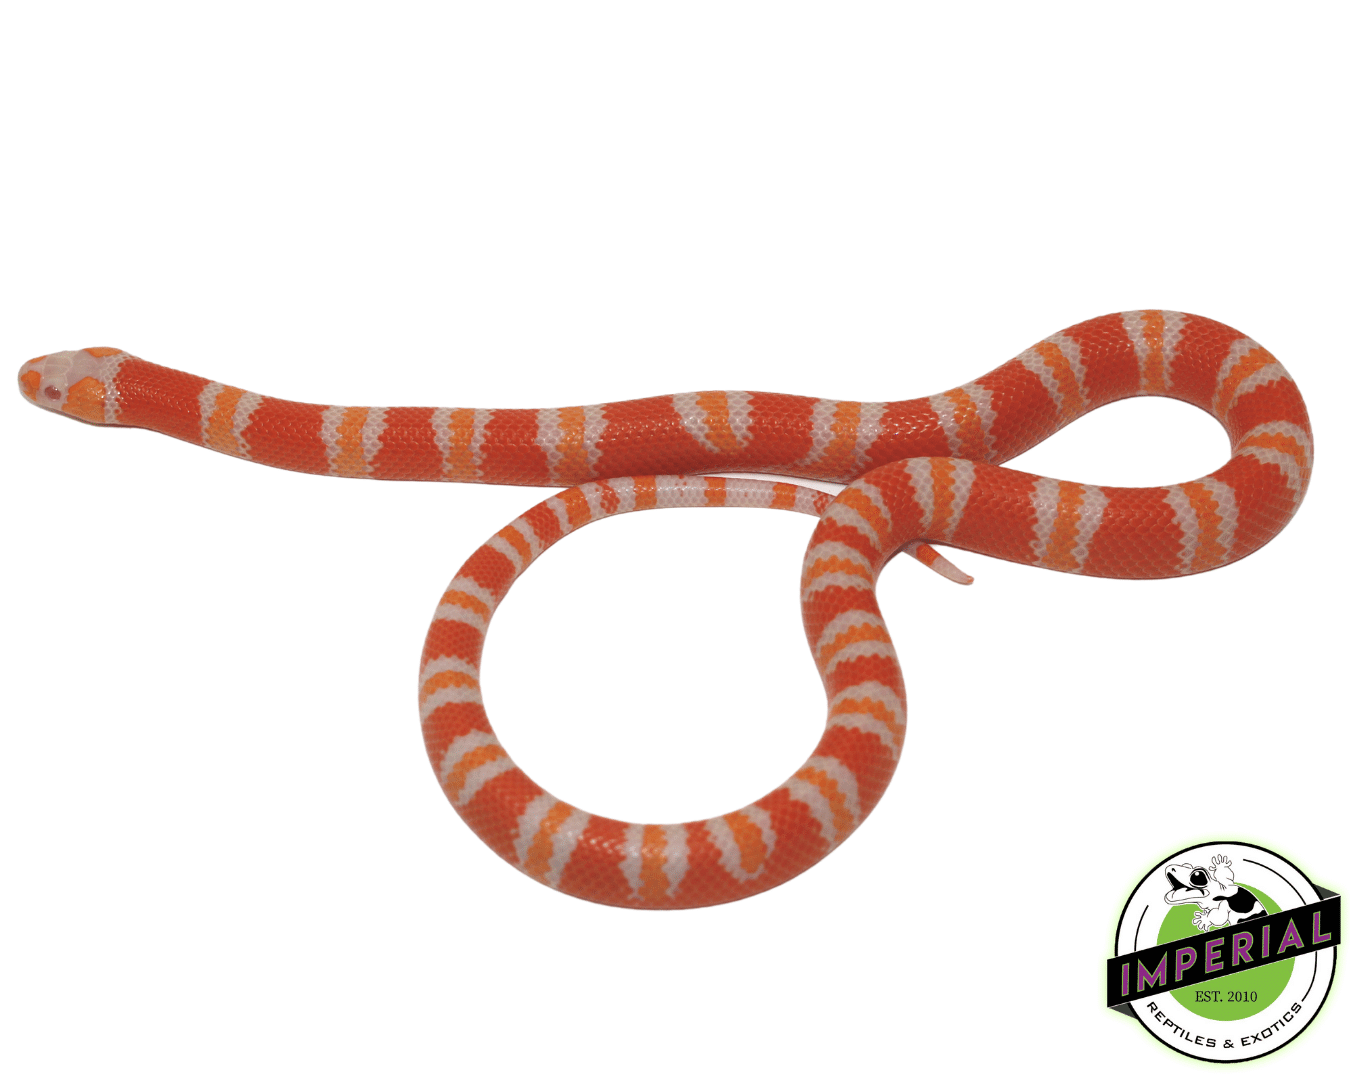 tangerine albino honduran milk snake for sale, buy reptiles online